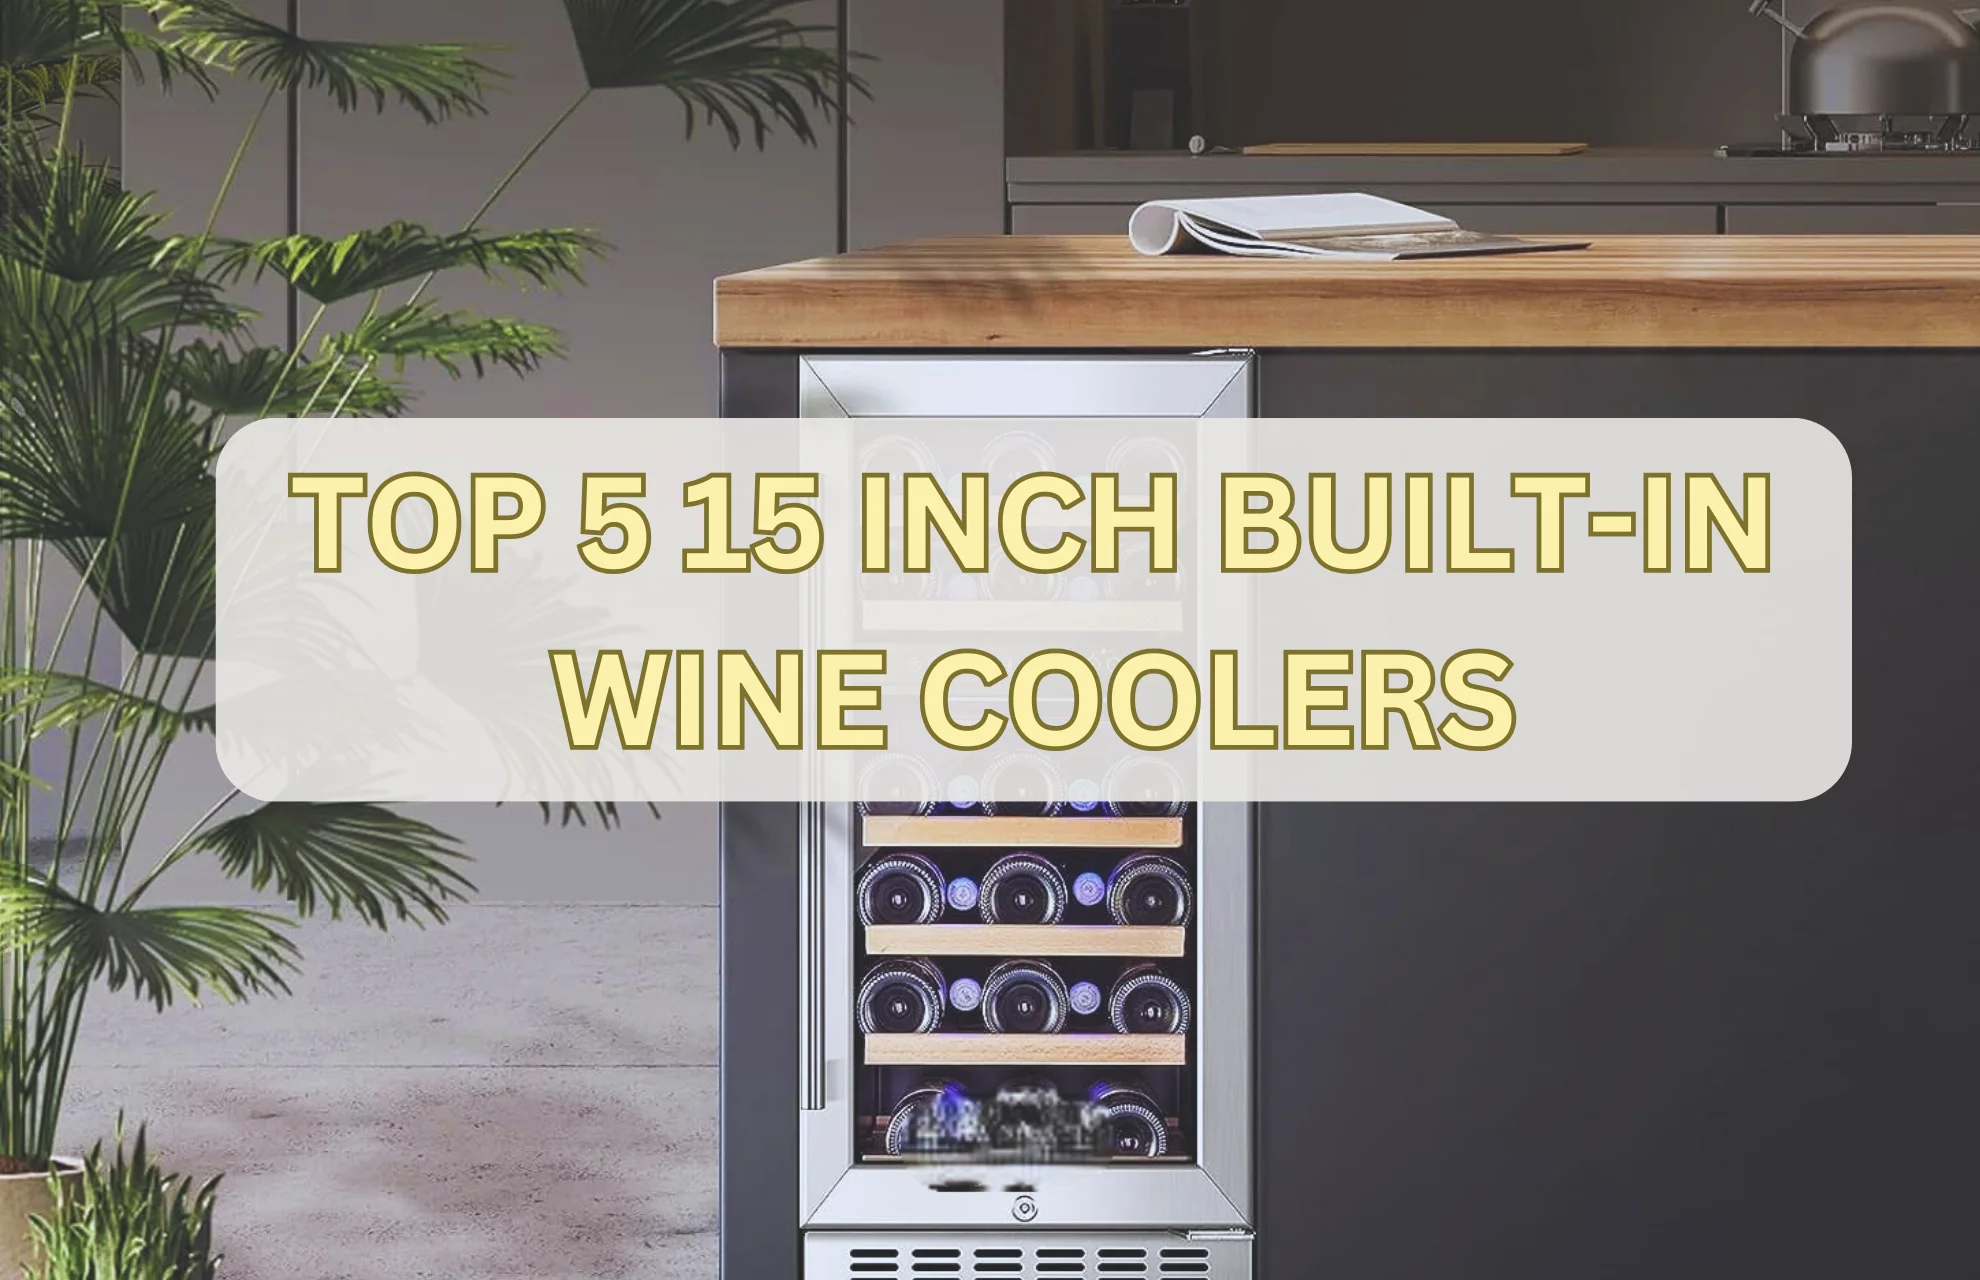 TOP 15 INCH BUILT-IN WINE COOLERS